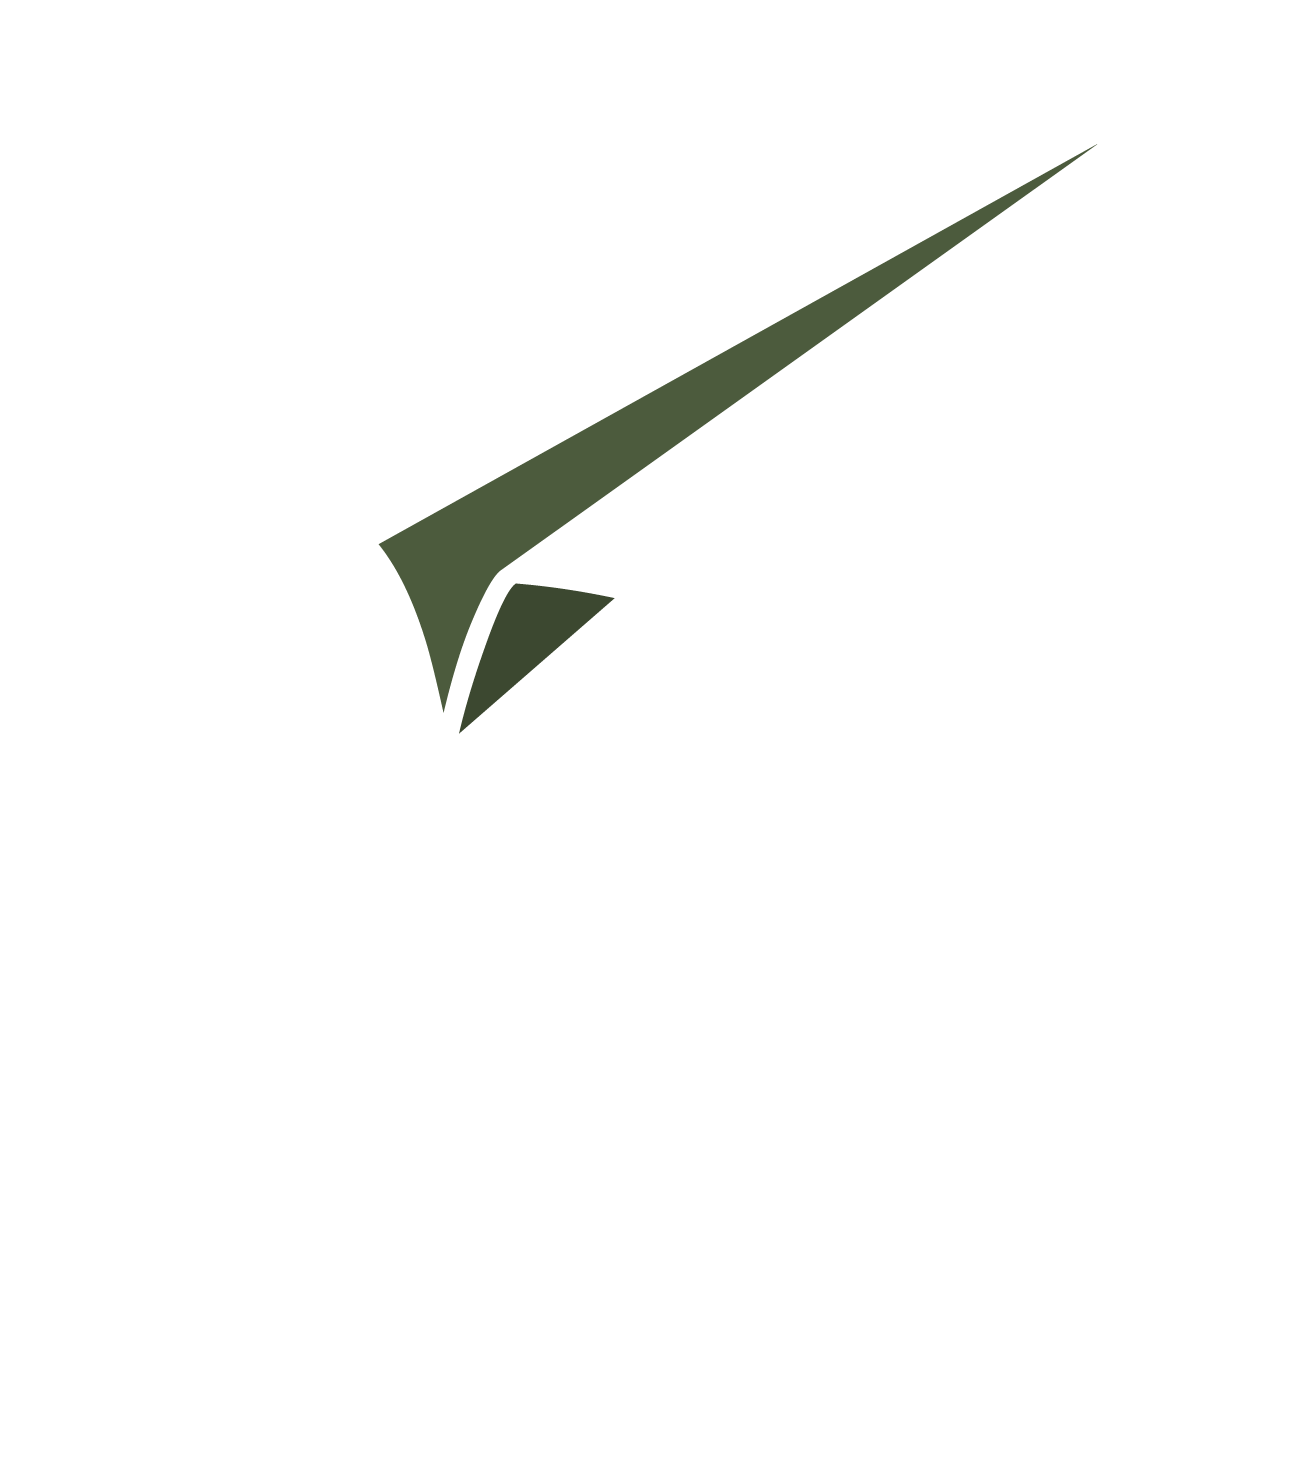 Kamikaze Film Cph